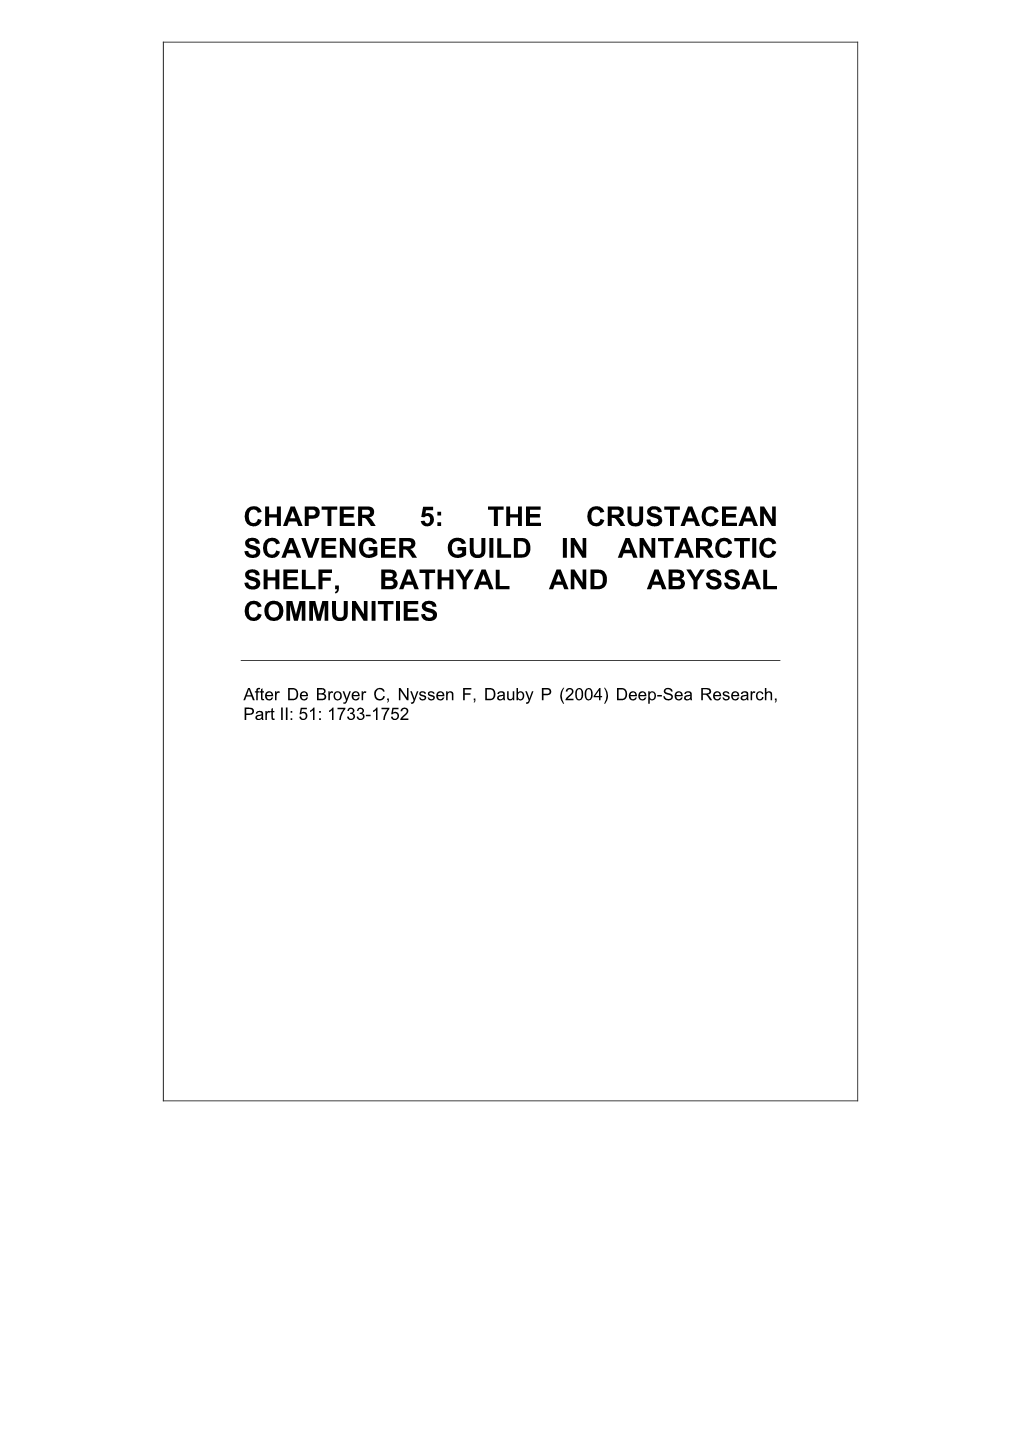 The Crustacean Scavenger Guild in Antarctic Shelf, Bathyal and Abyssal Communities